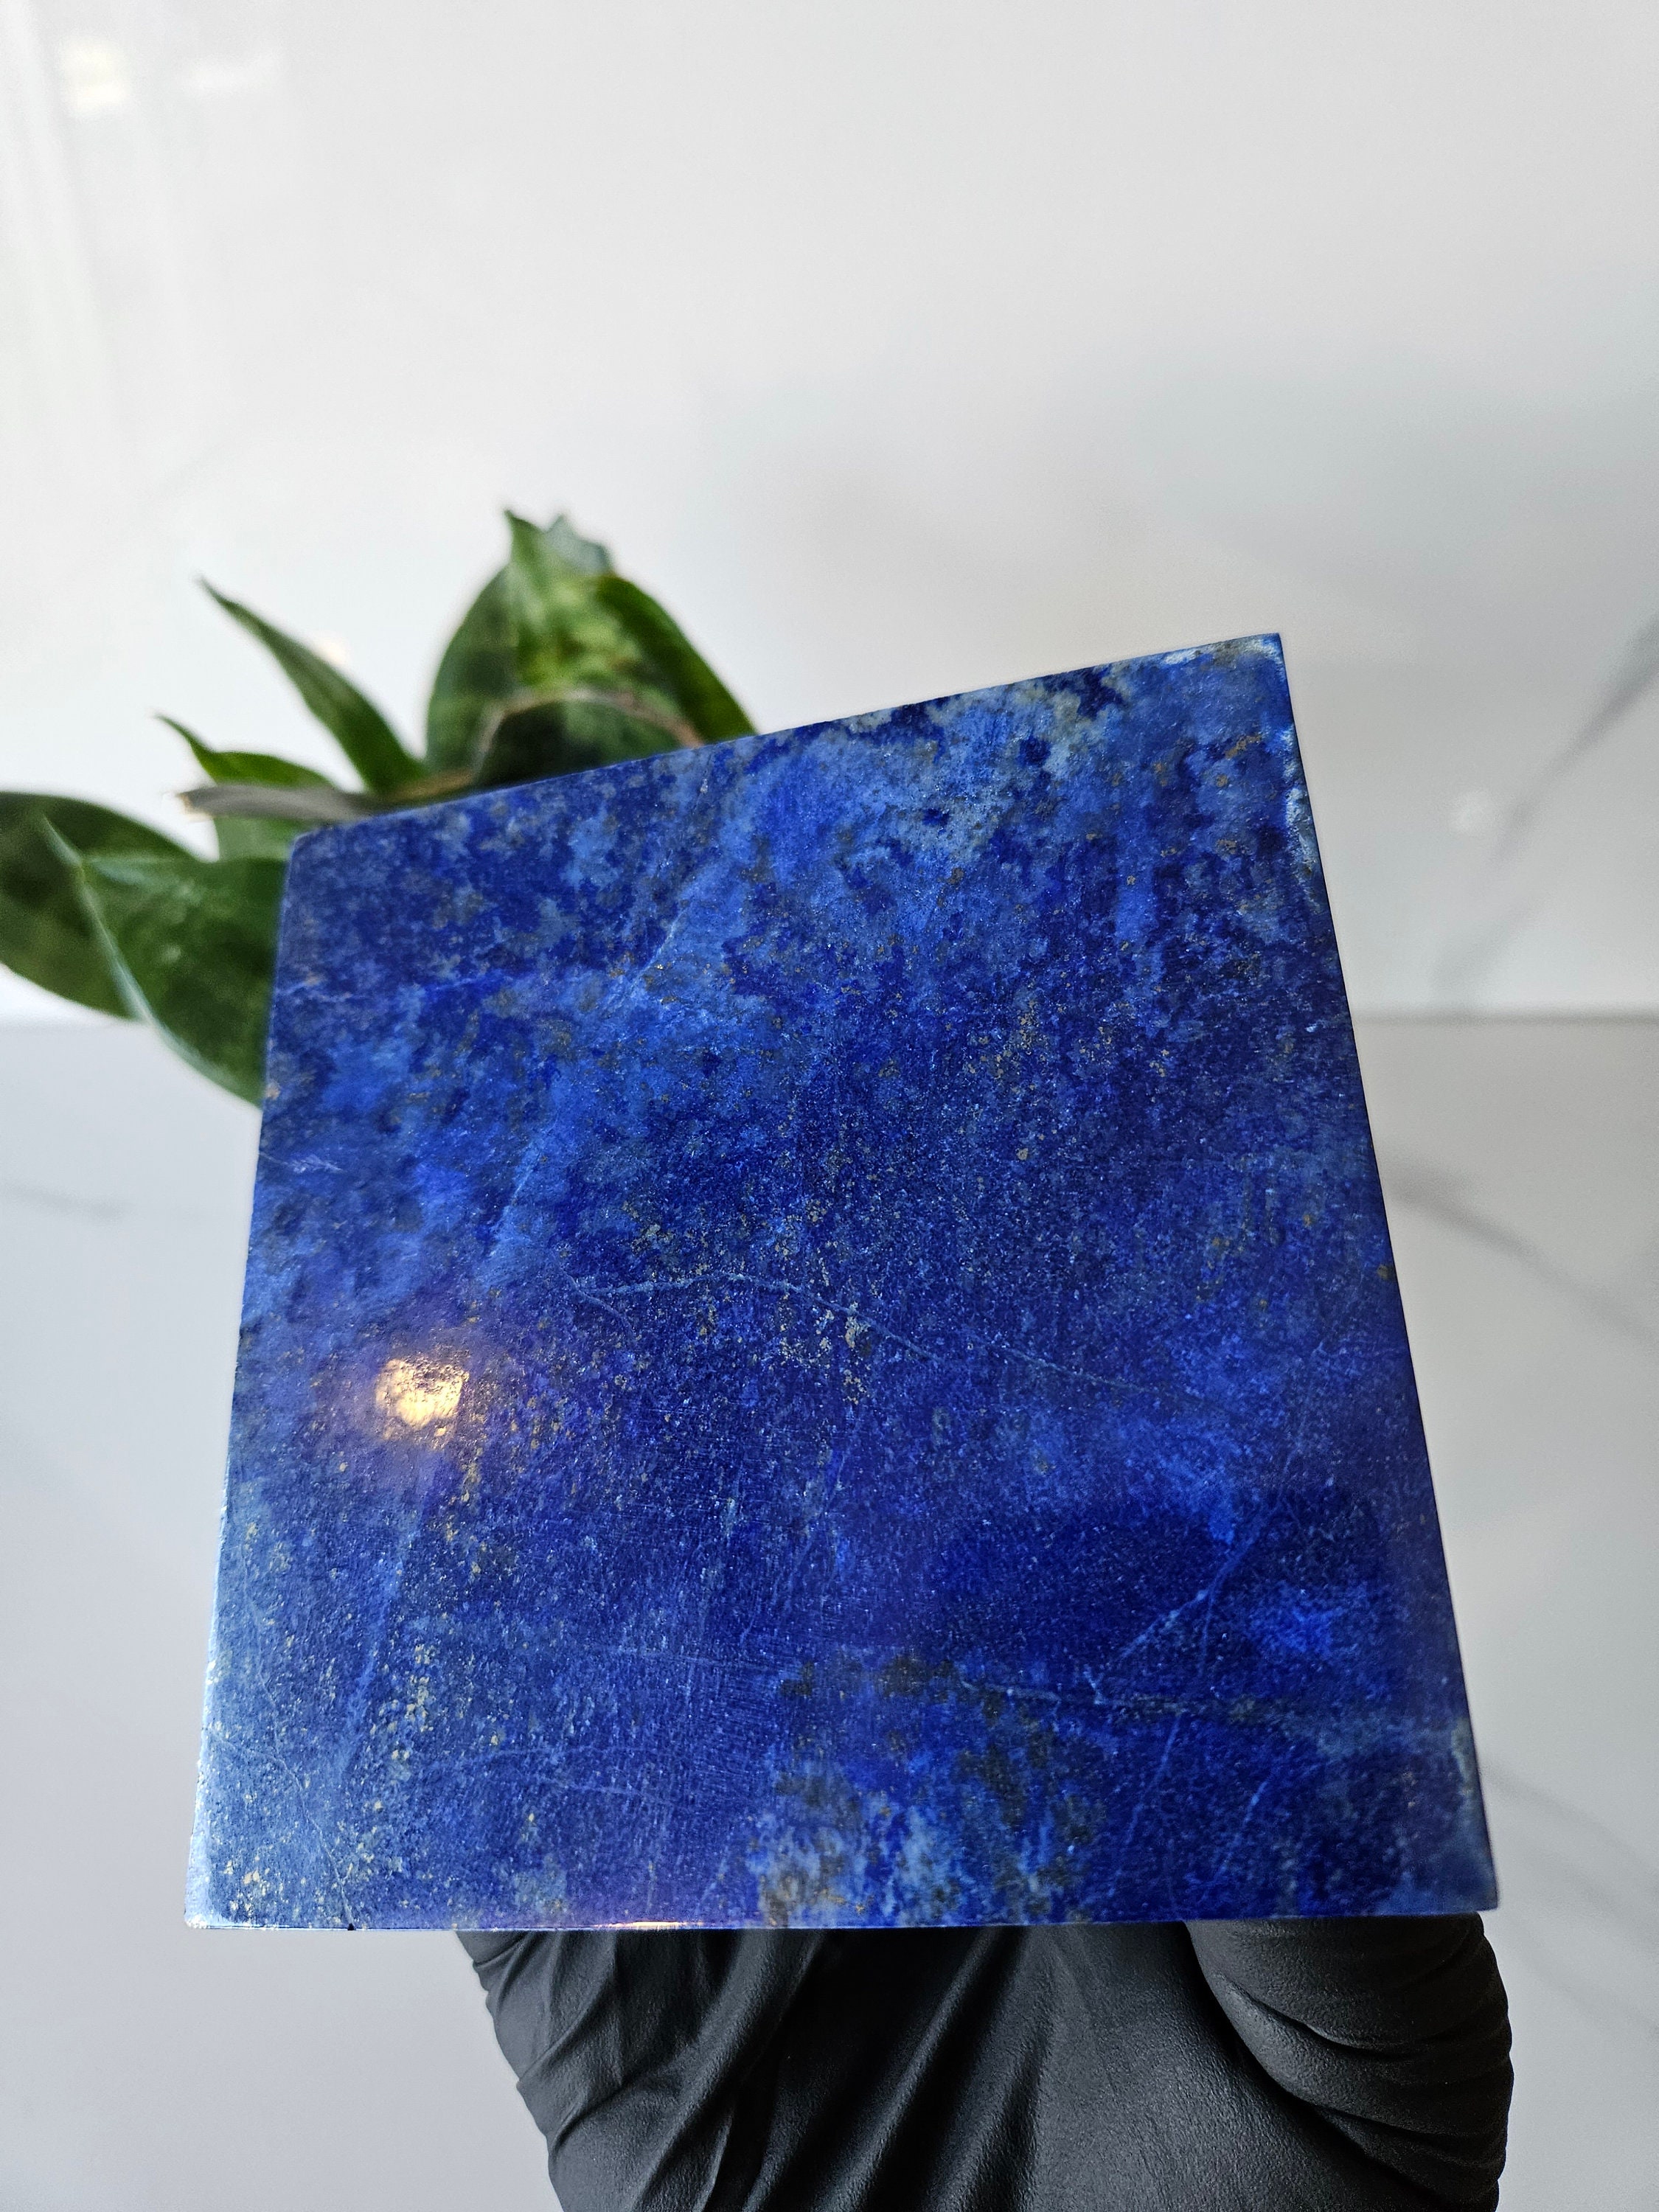 Quality 10 x 10 cm Polished Stone Sided Tile | willpower, Blue Aventurine, royal blue, jewlery, birthday gift, Birthstone, Stone Slice, Heal